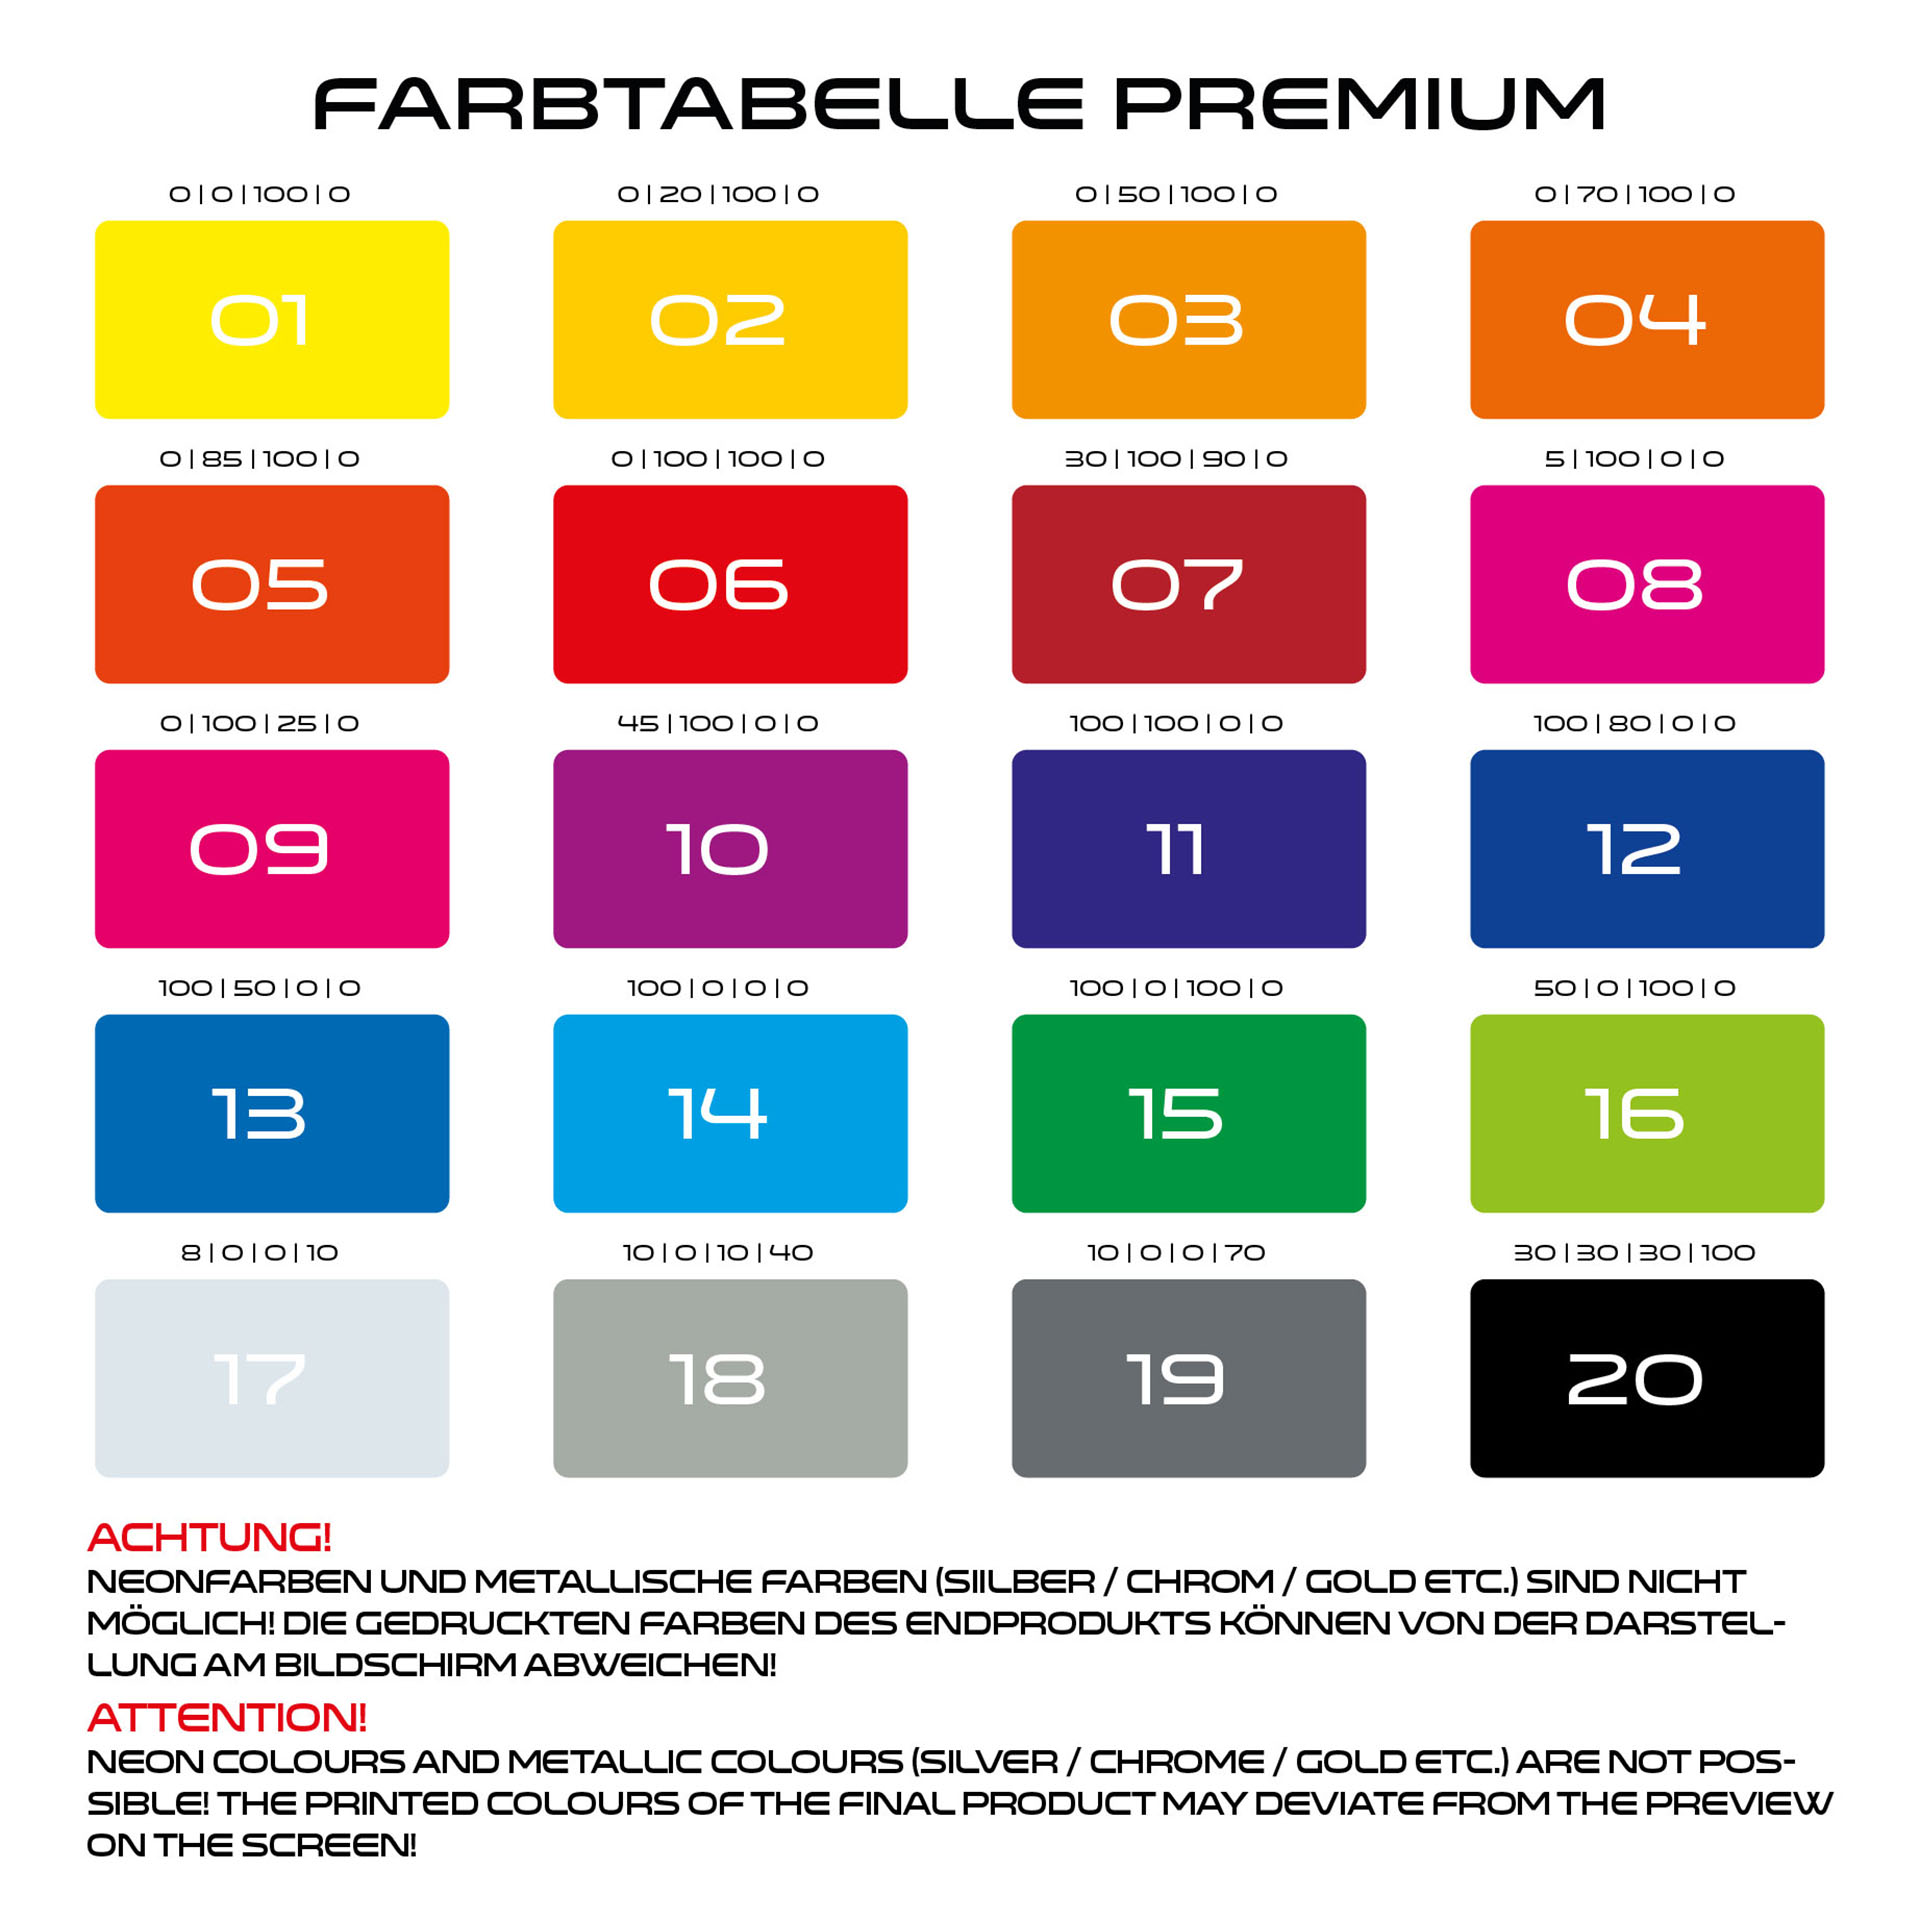 Renngrib V1 Felgenaufkleber Premium Farbtabelle Premium Wheelsticker